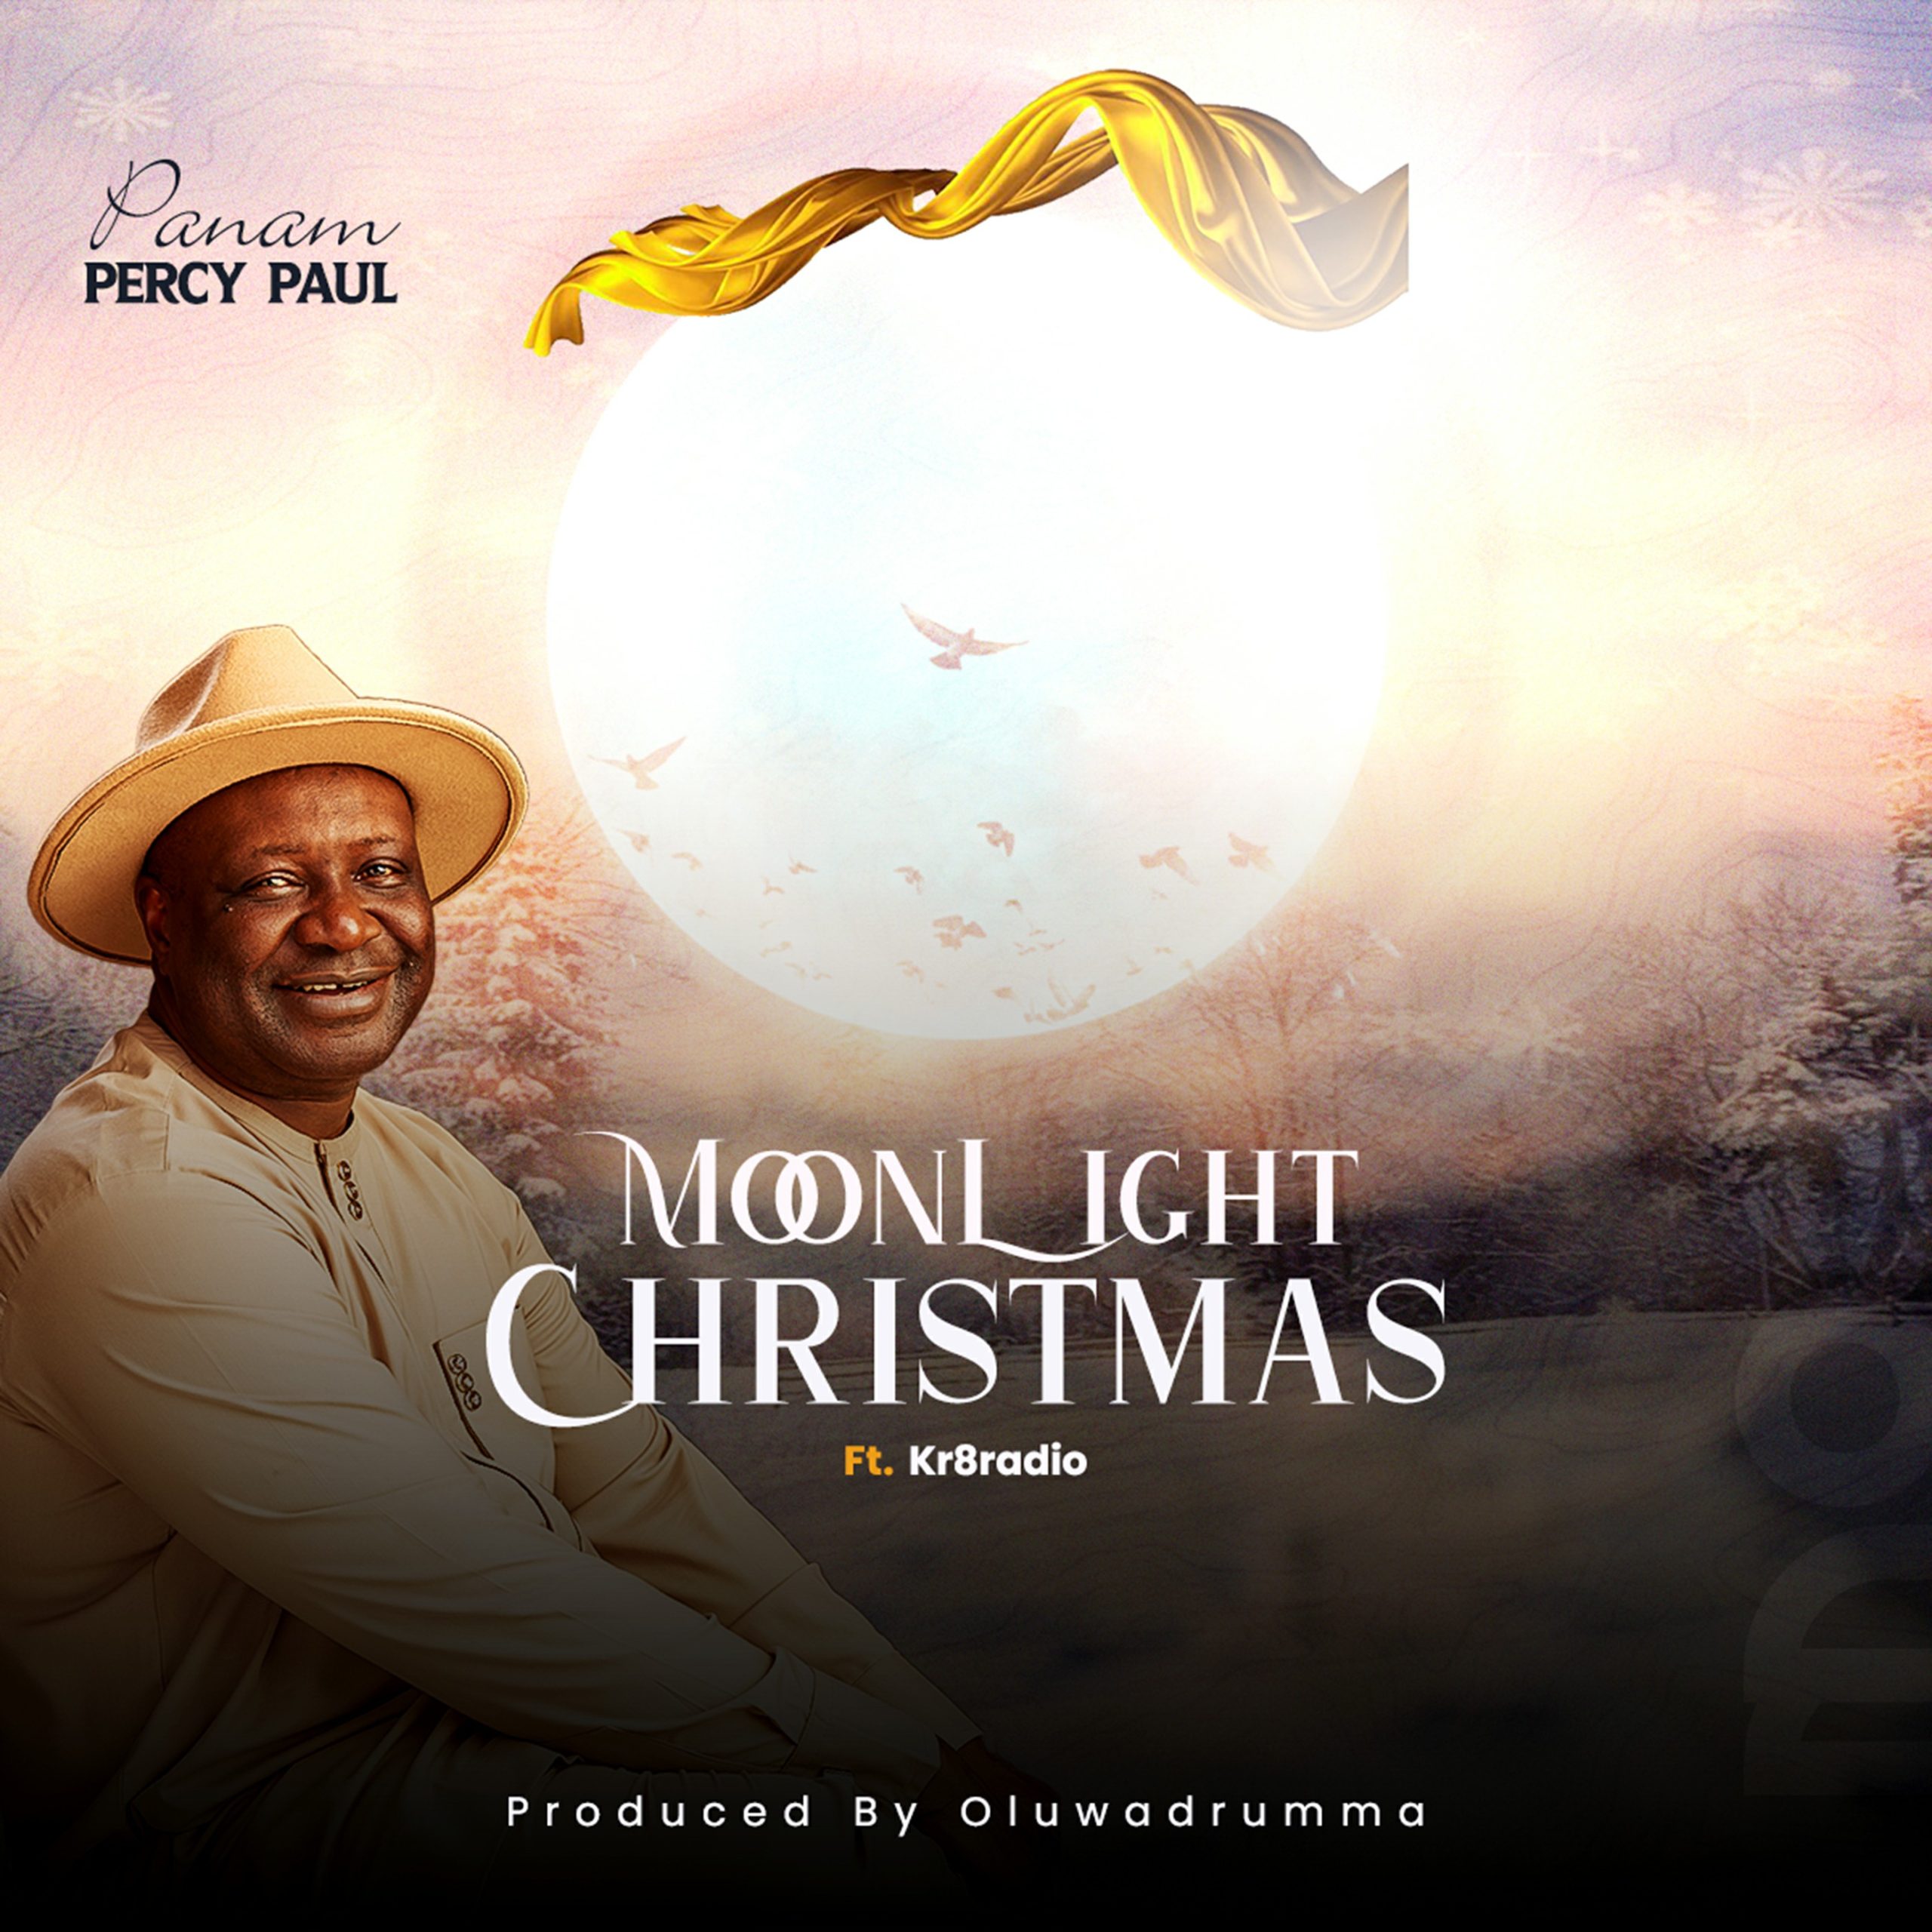 Moonlight Christmas – Panam Percy Paul and Kr8radio